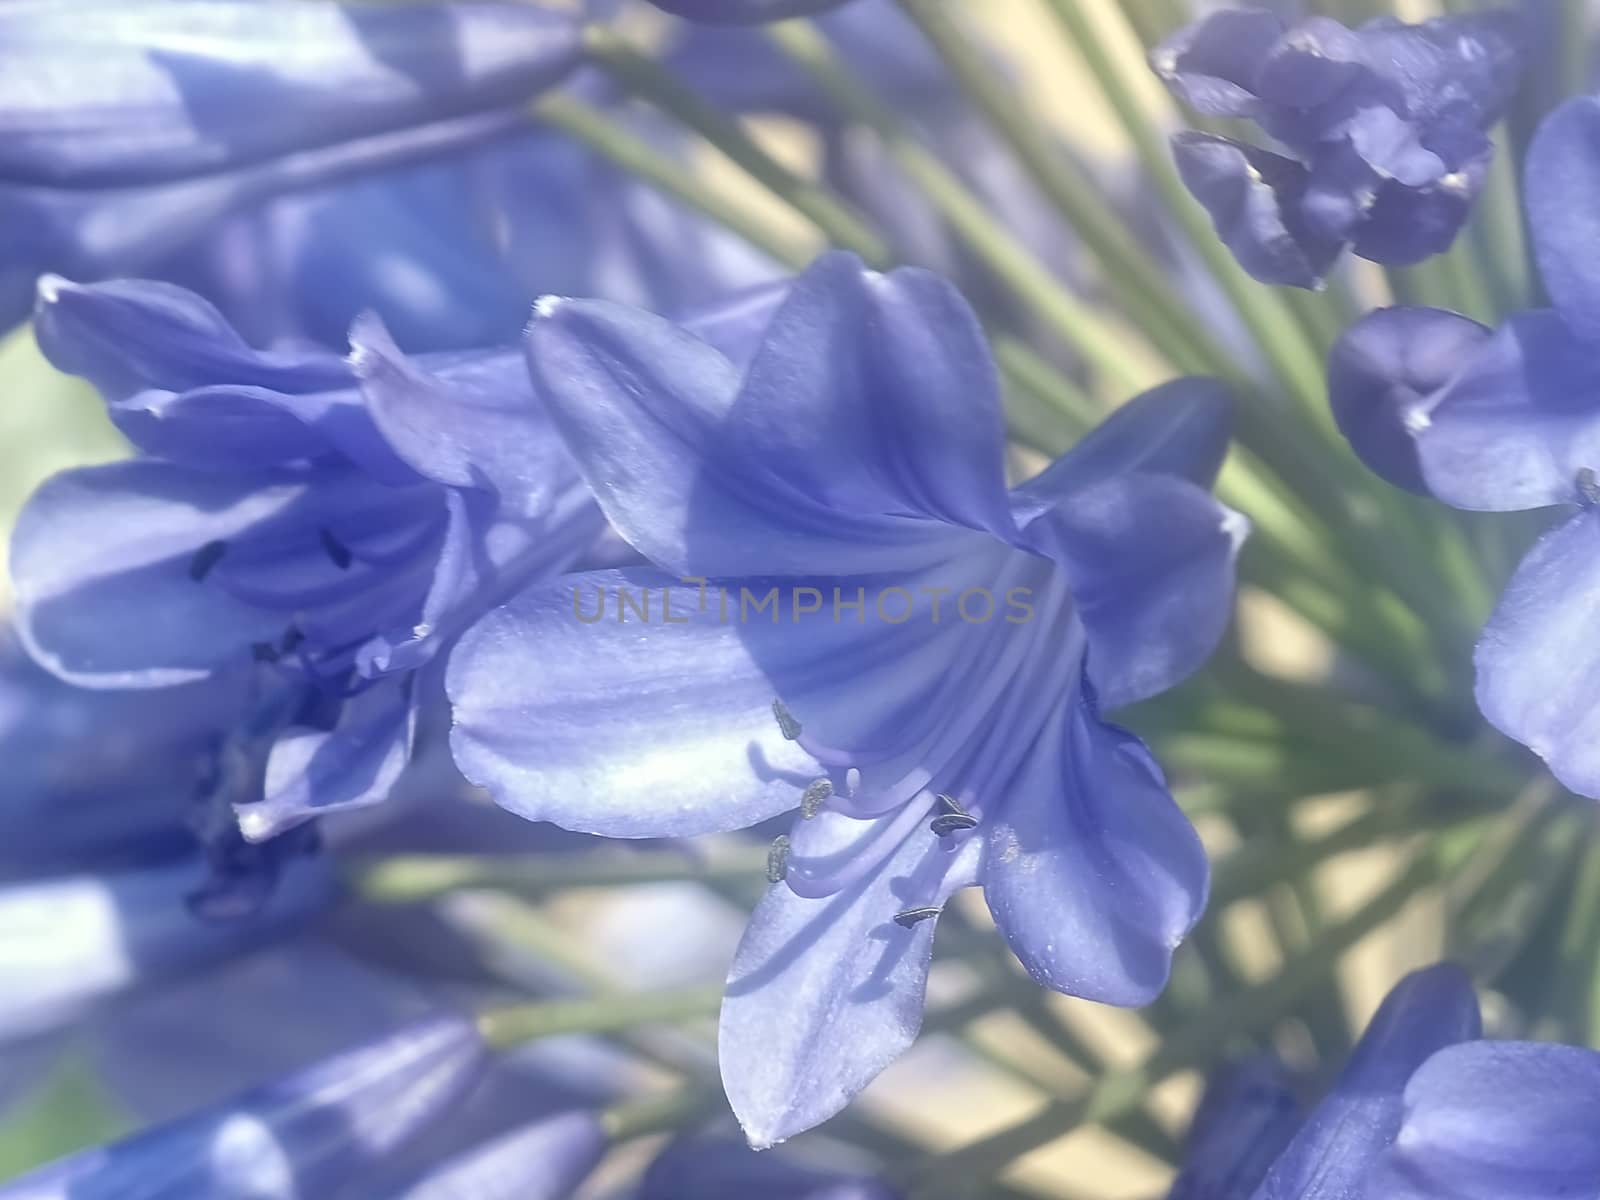 Wonderful blue blooming agapanthus flower by Stimmungsbilder